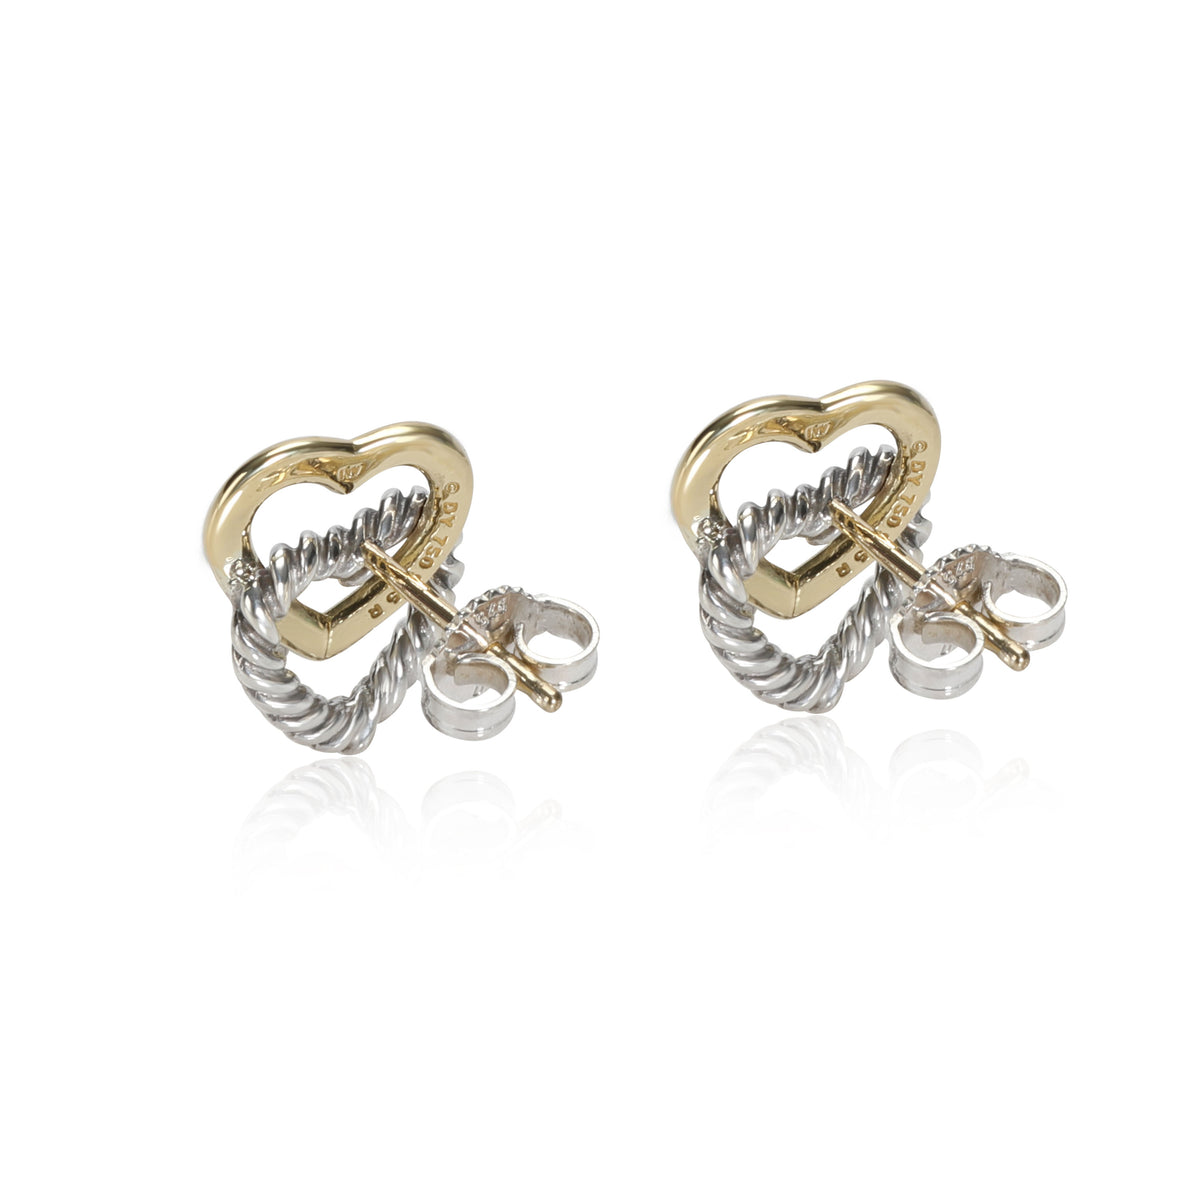 David Yurman Cable Heart Stud Earring in 18K Yellow Gold/Sterling Silver